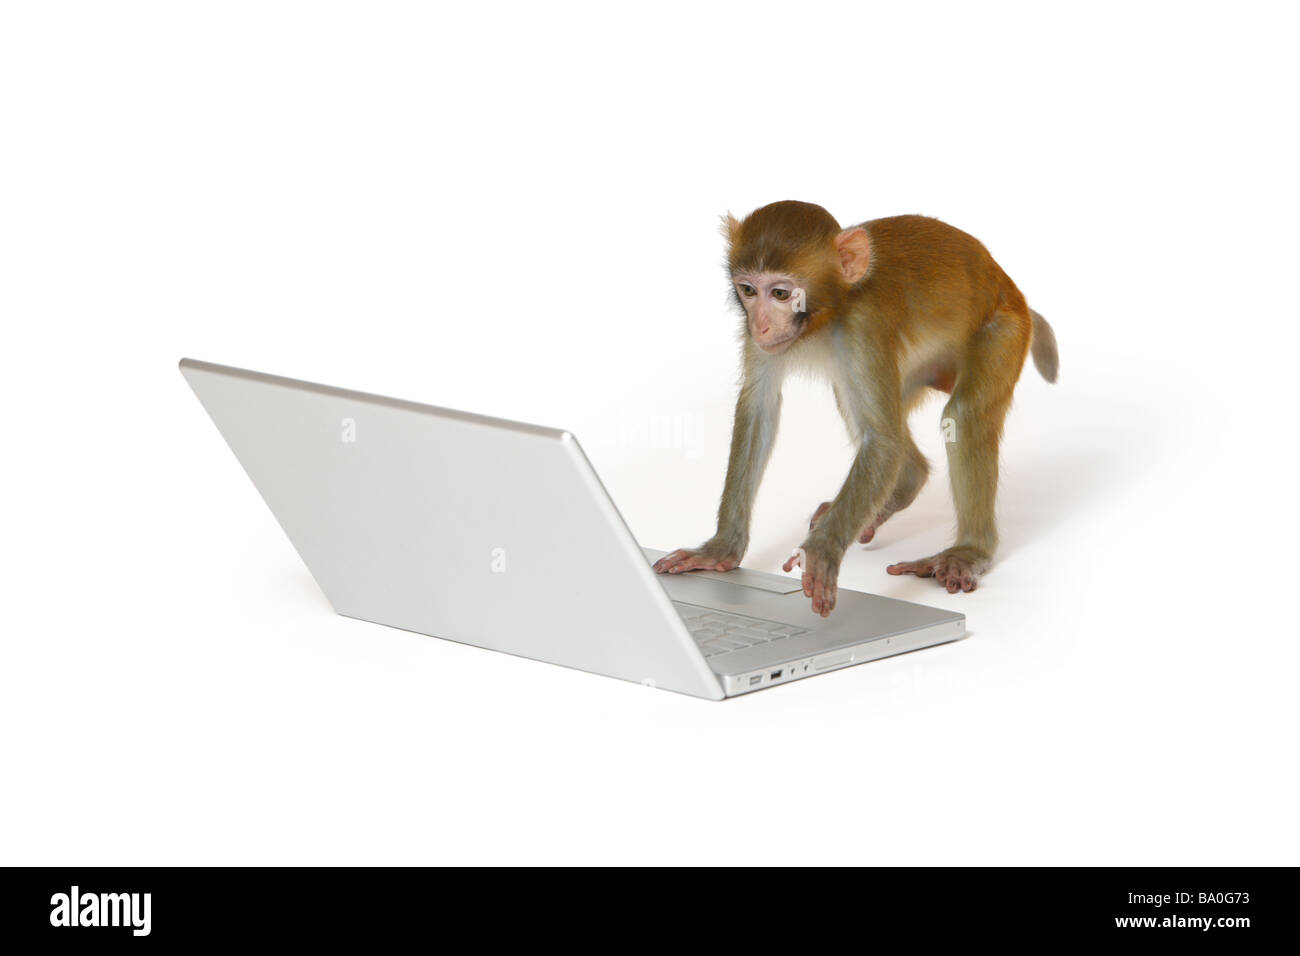 Monkey with laptop computer Stock Photo